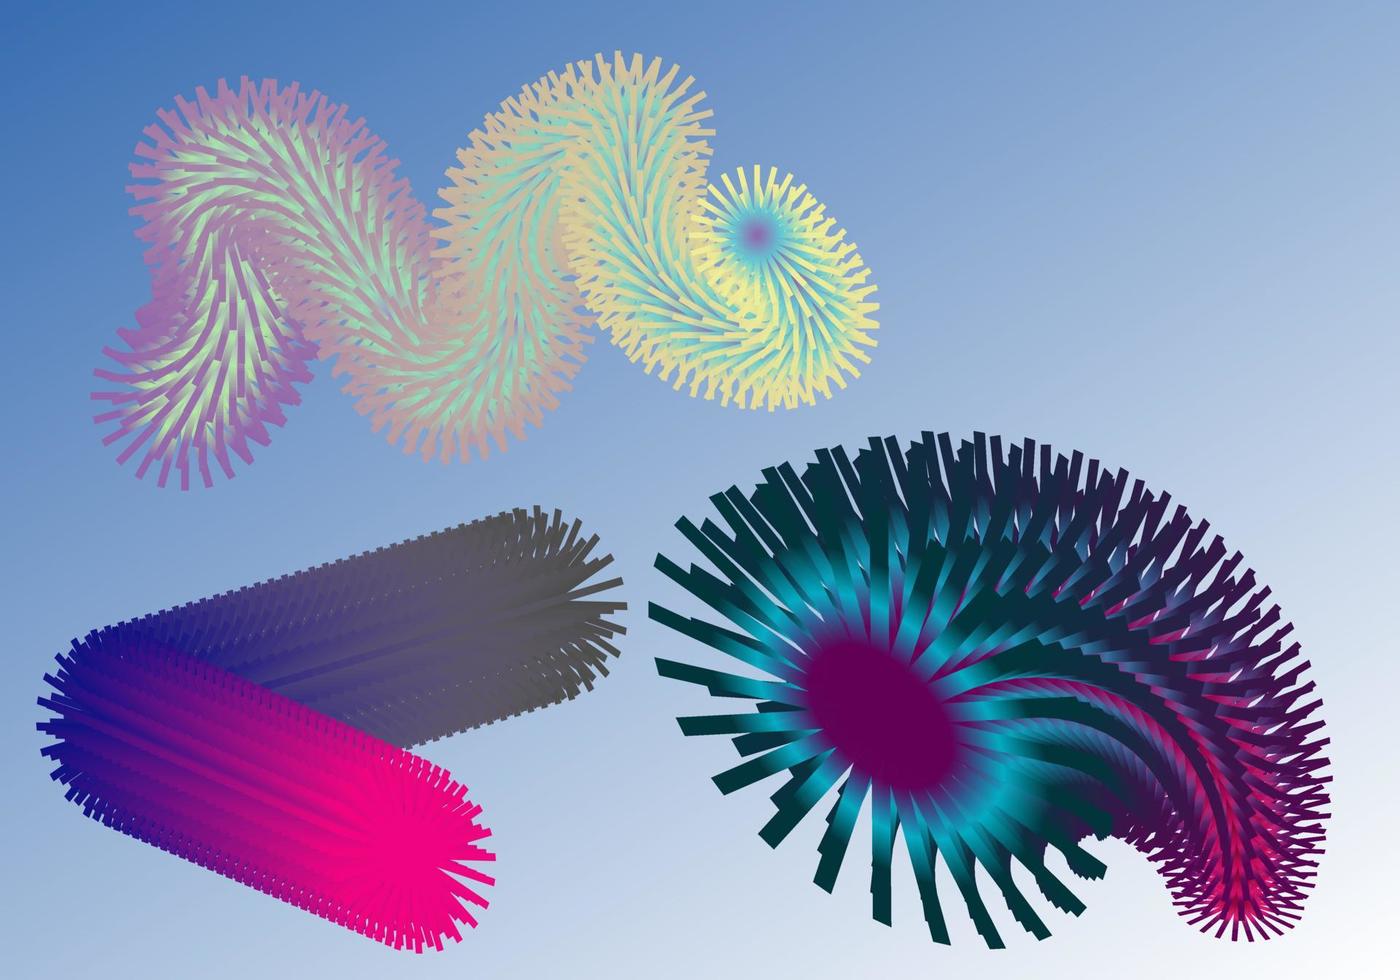 print3d fondo de presentación abstracta de curva moderna. fondo de lujo. decoración abstracta, gradientes de semitonos, fondo geométrico colorido. composición de formas de degradado de moda. vector